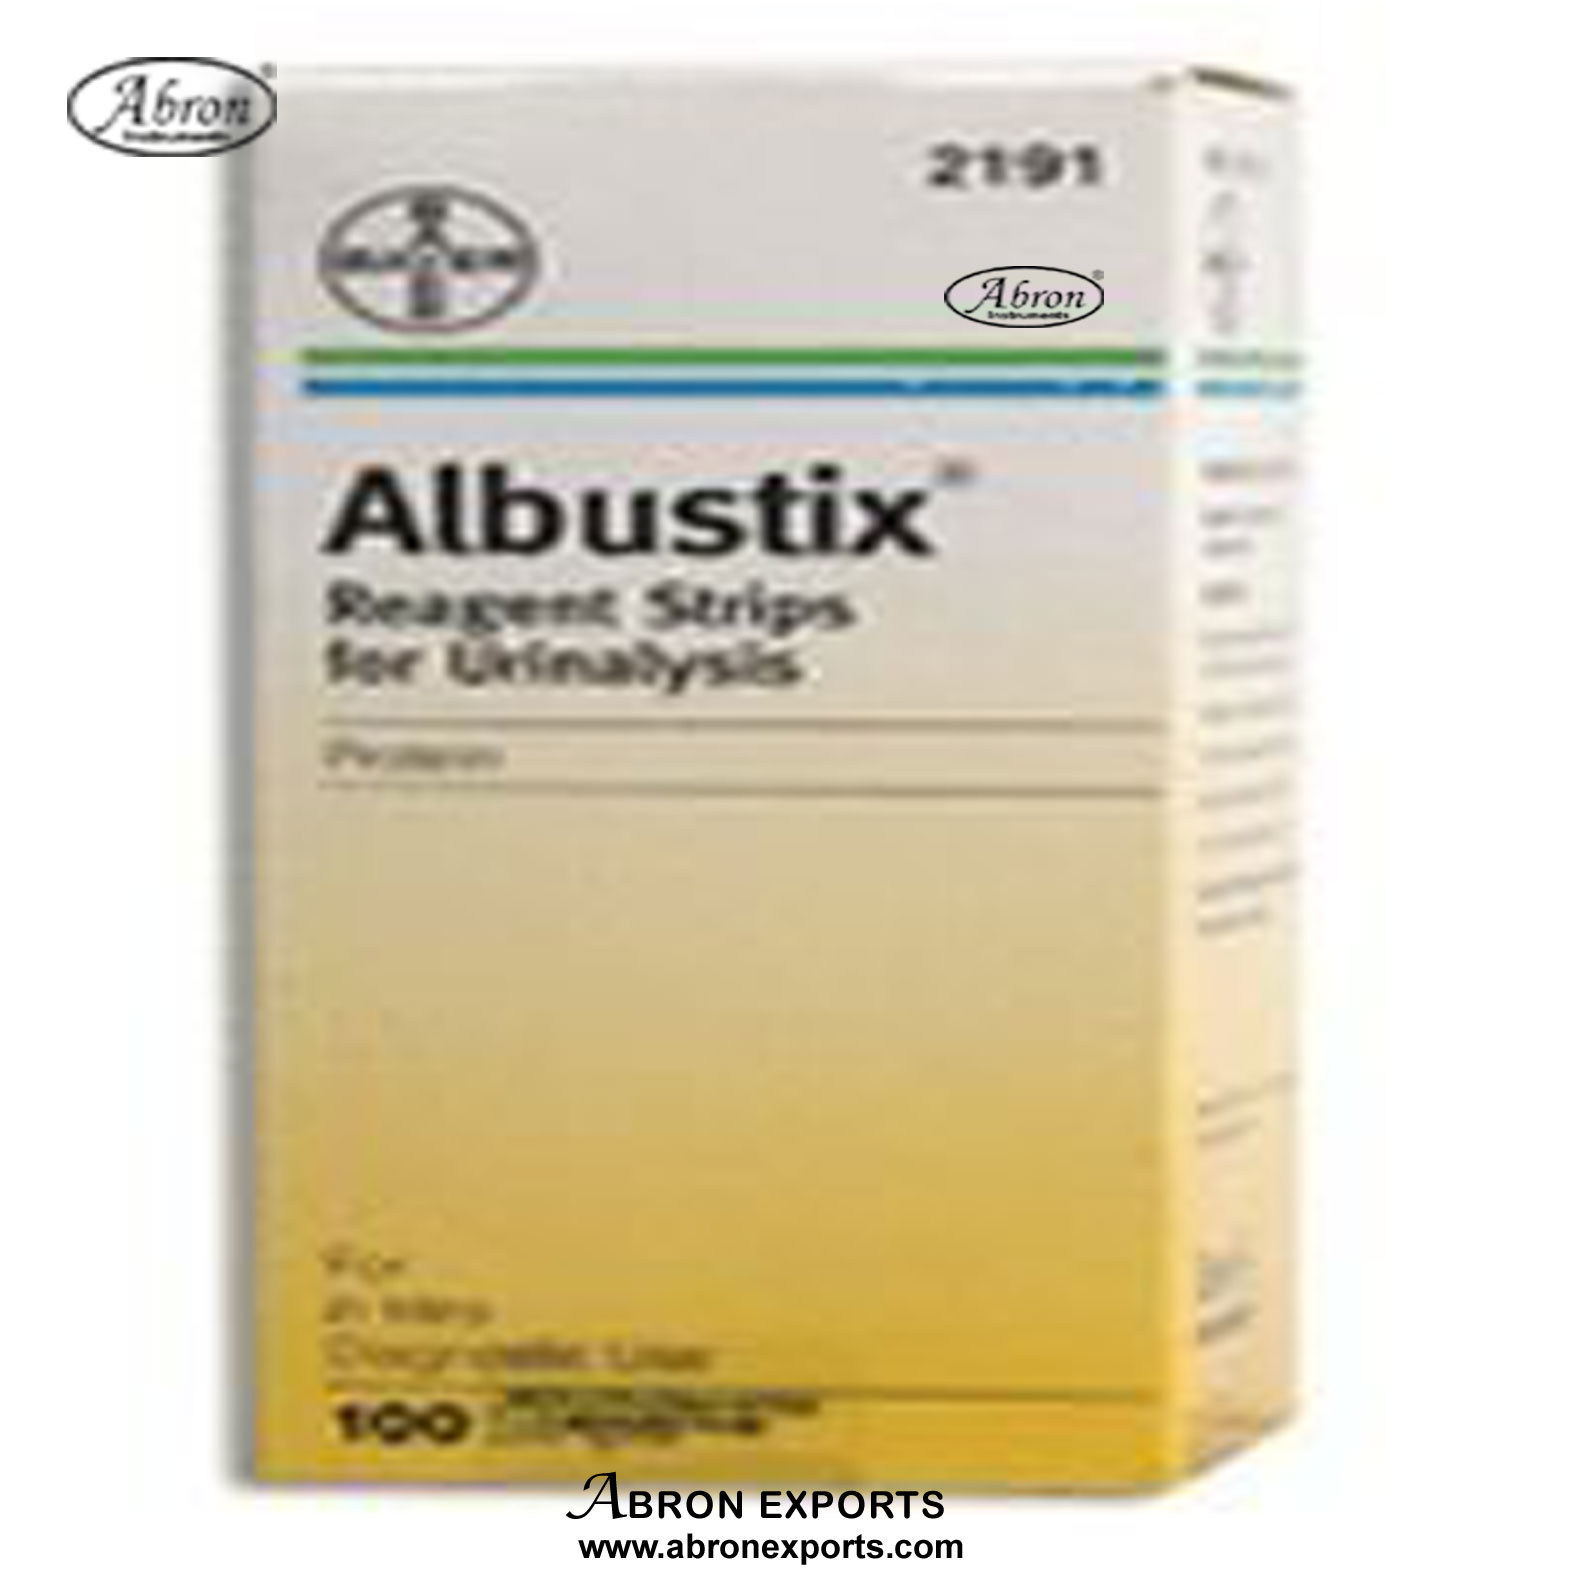 Test strips Albustix test sticks uninology for protine test pack of 50 abron 